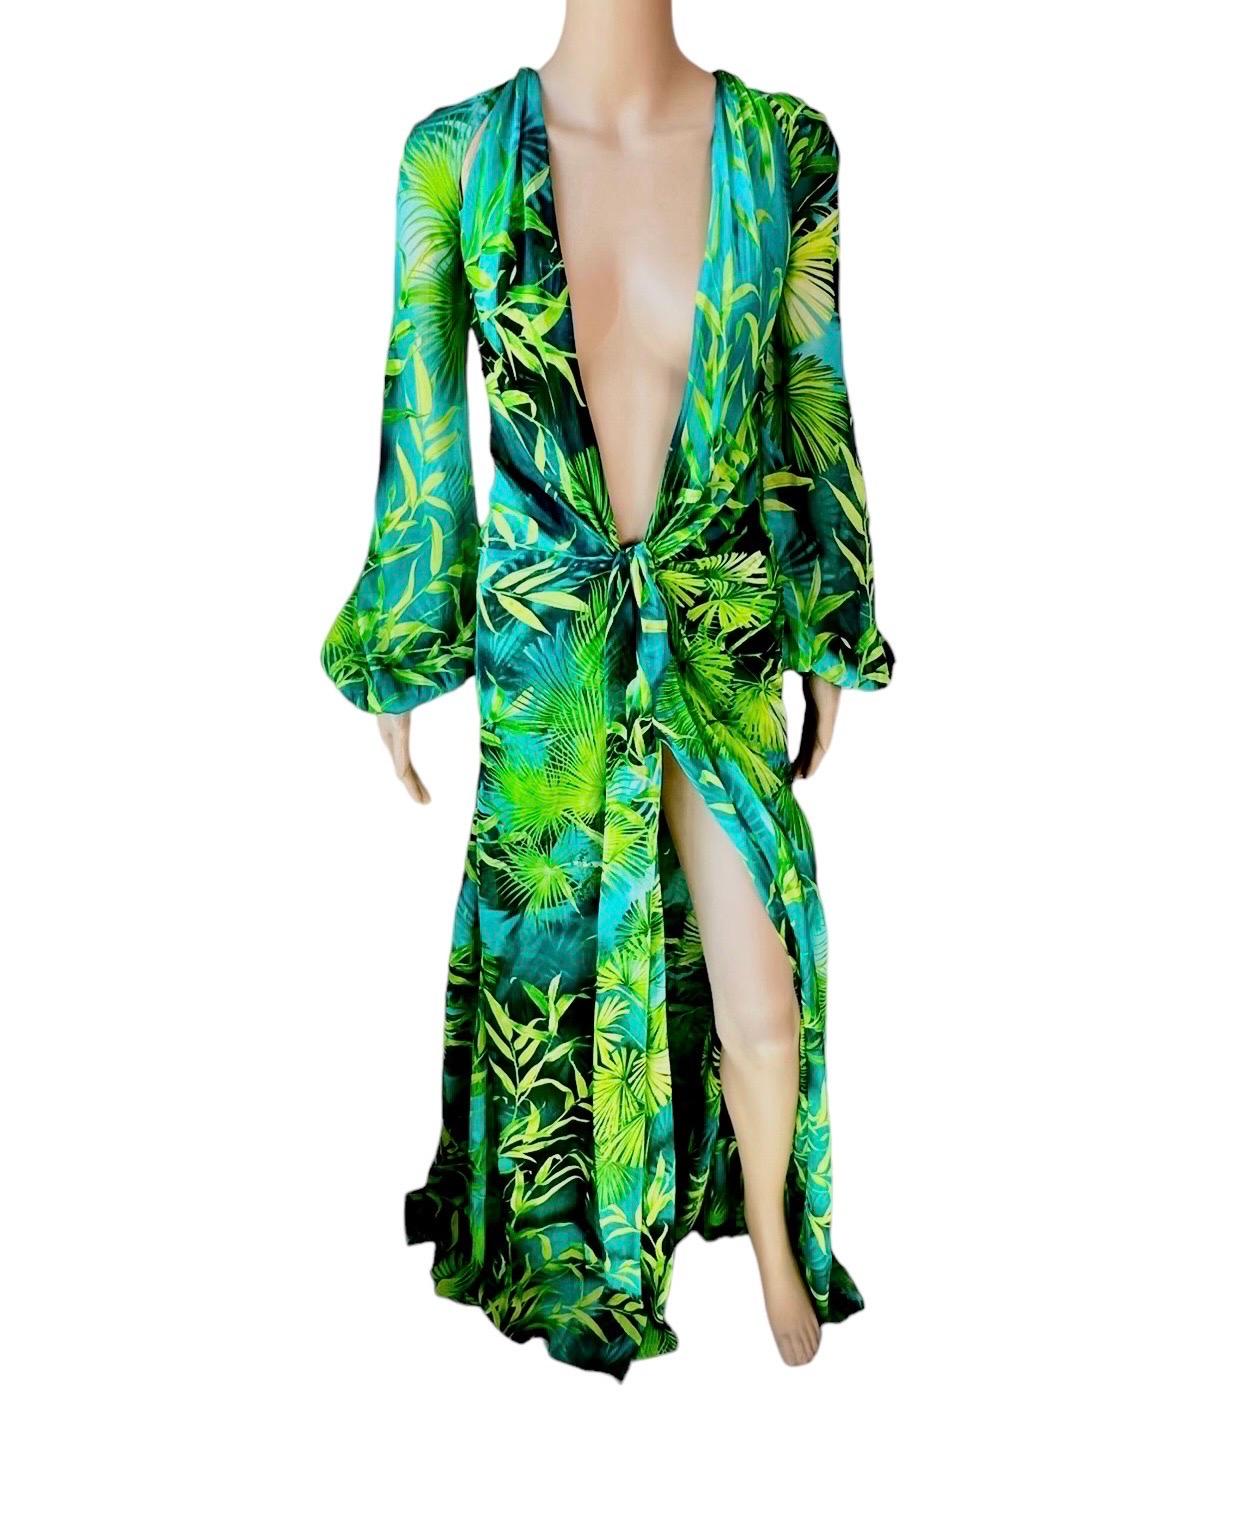 Women's or Men's Versace S/S 2020 Plunging Jungle Print Bodysuit & Evening Dress Gown Set